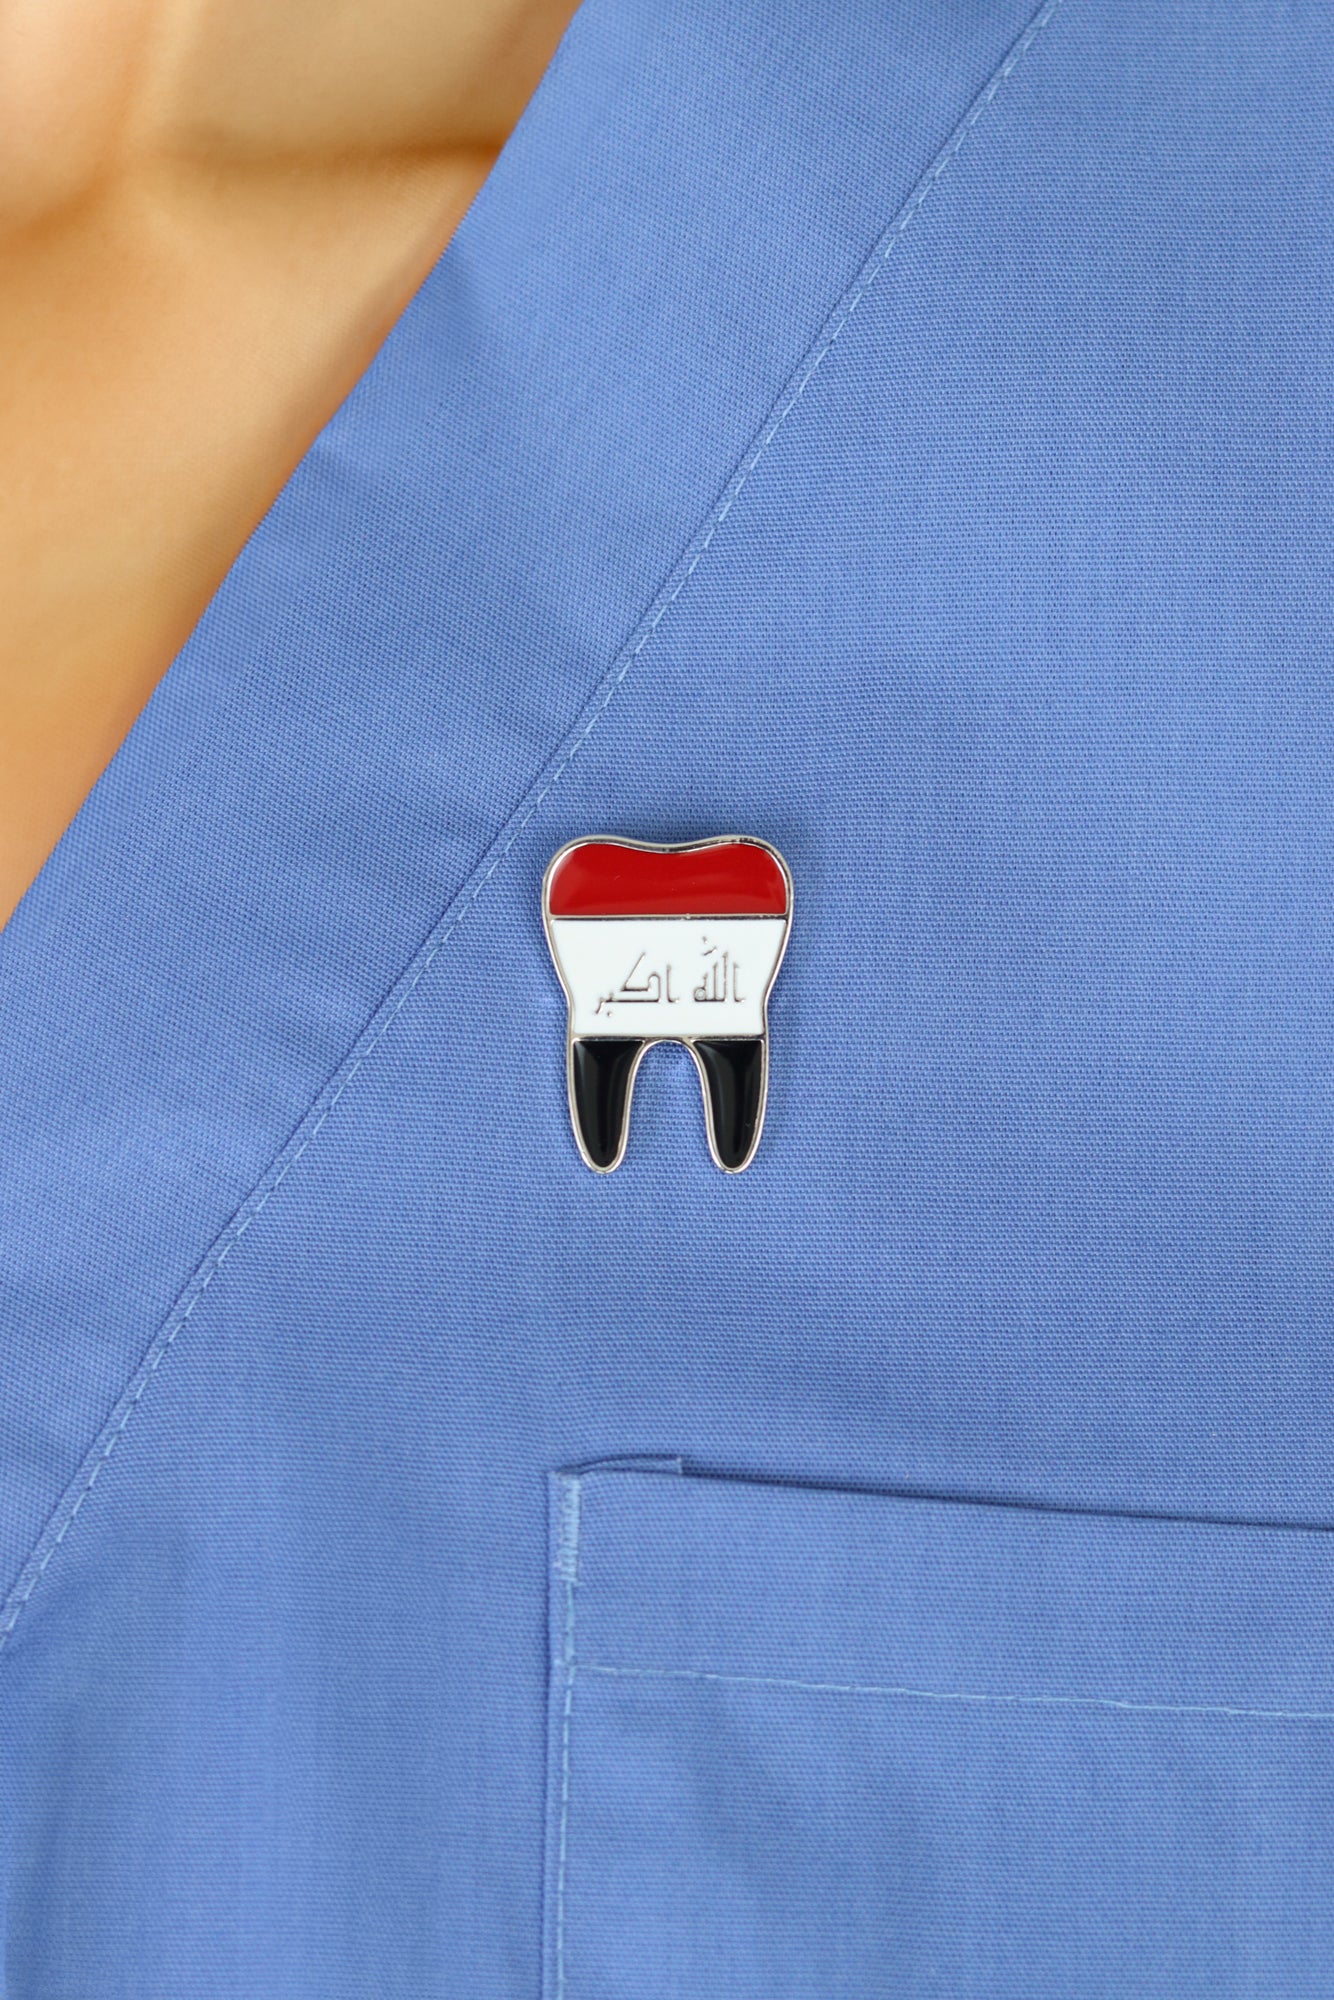 Iraq Tooth Pin